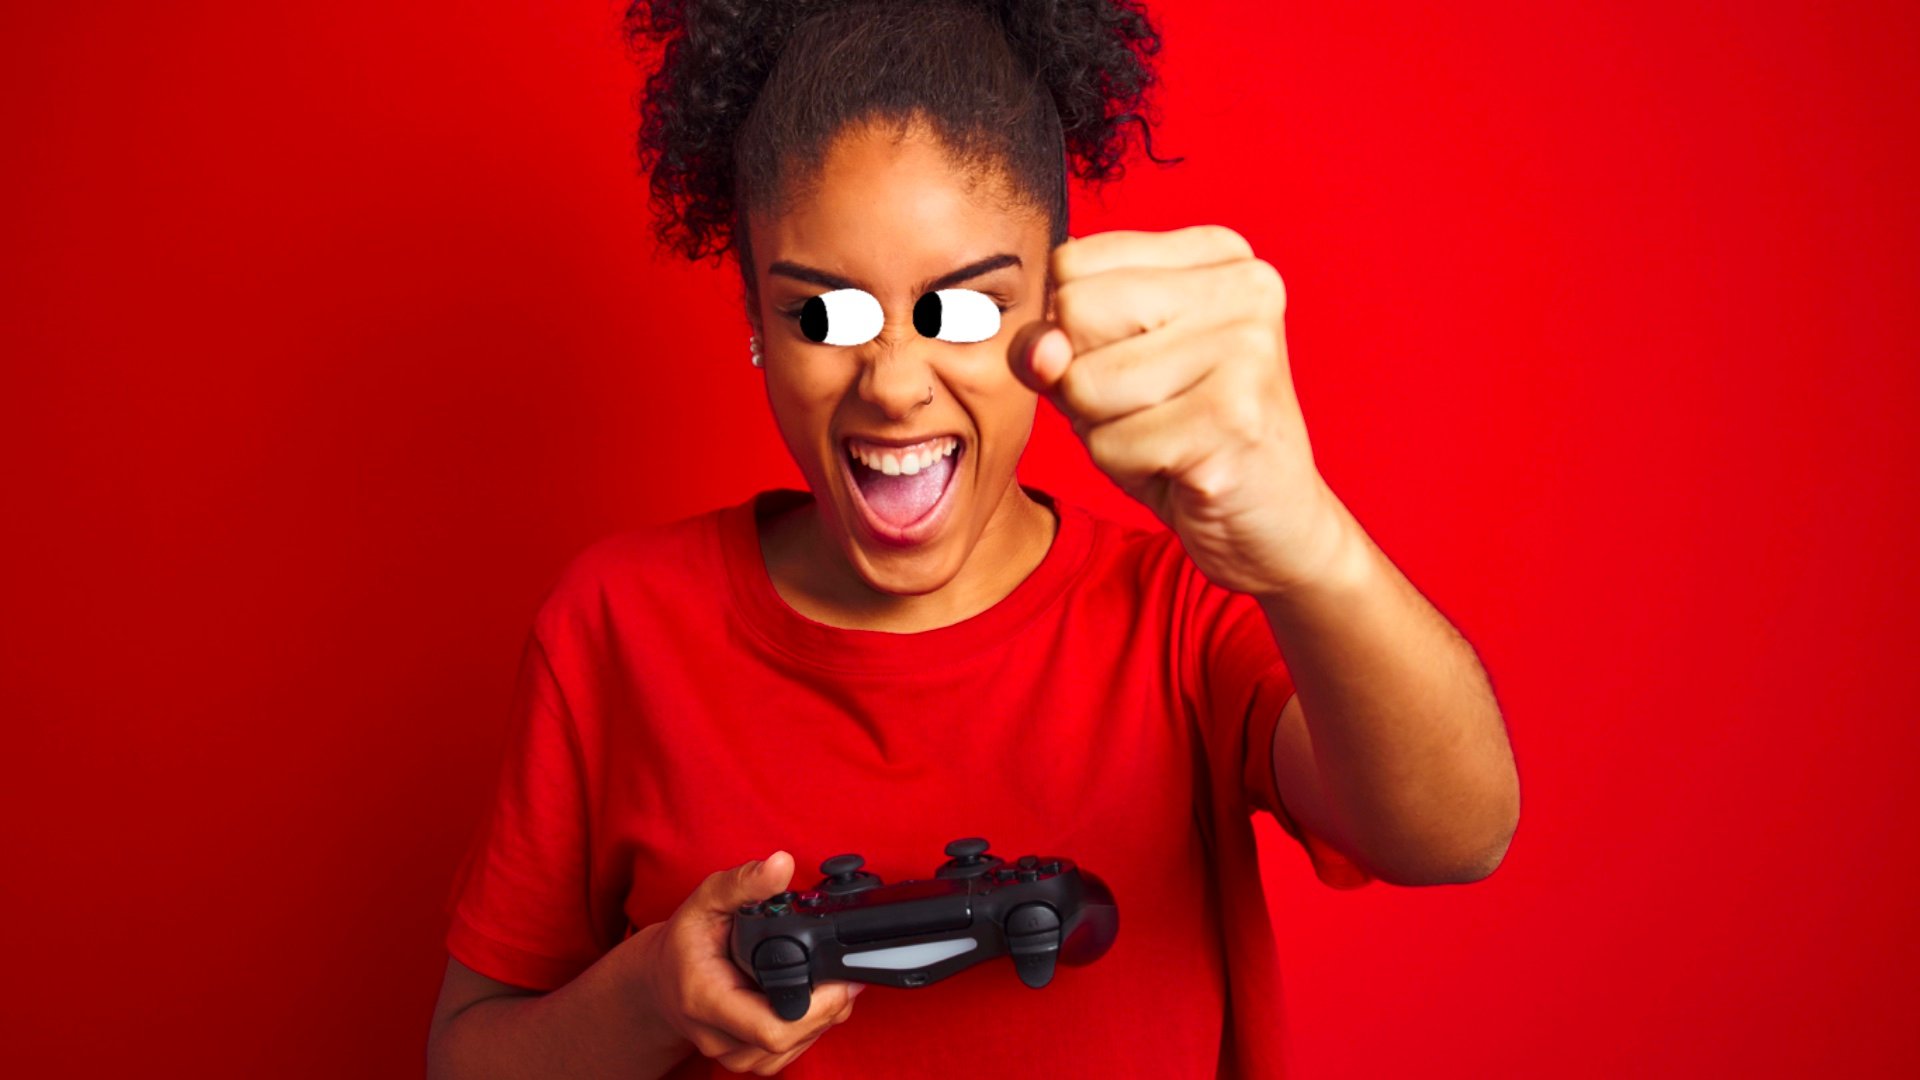 A gamer wearing a red t-shirt